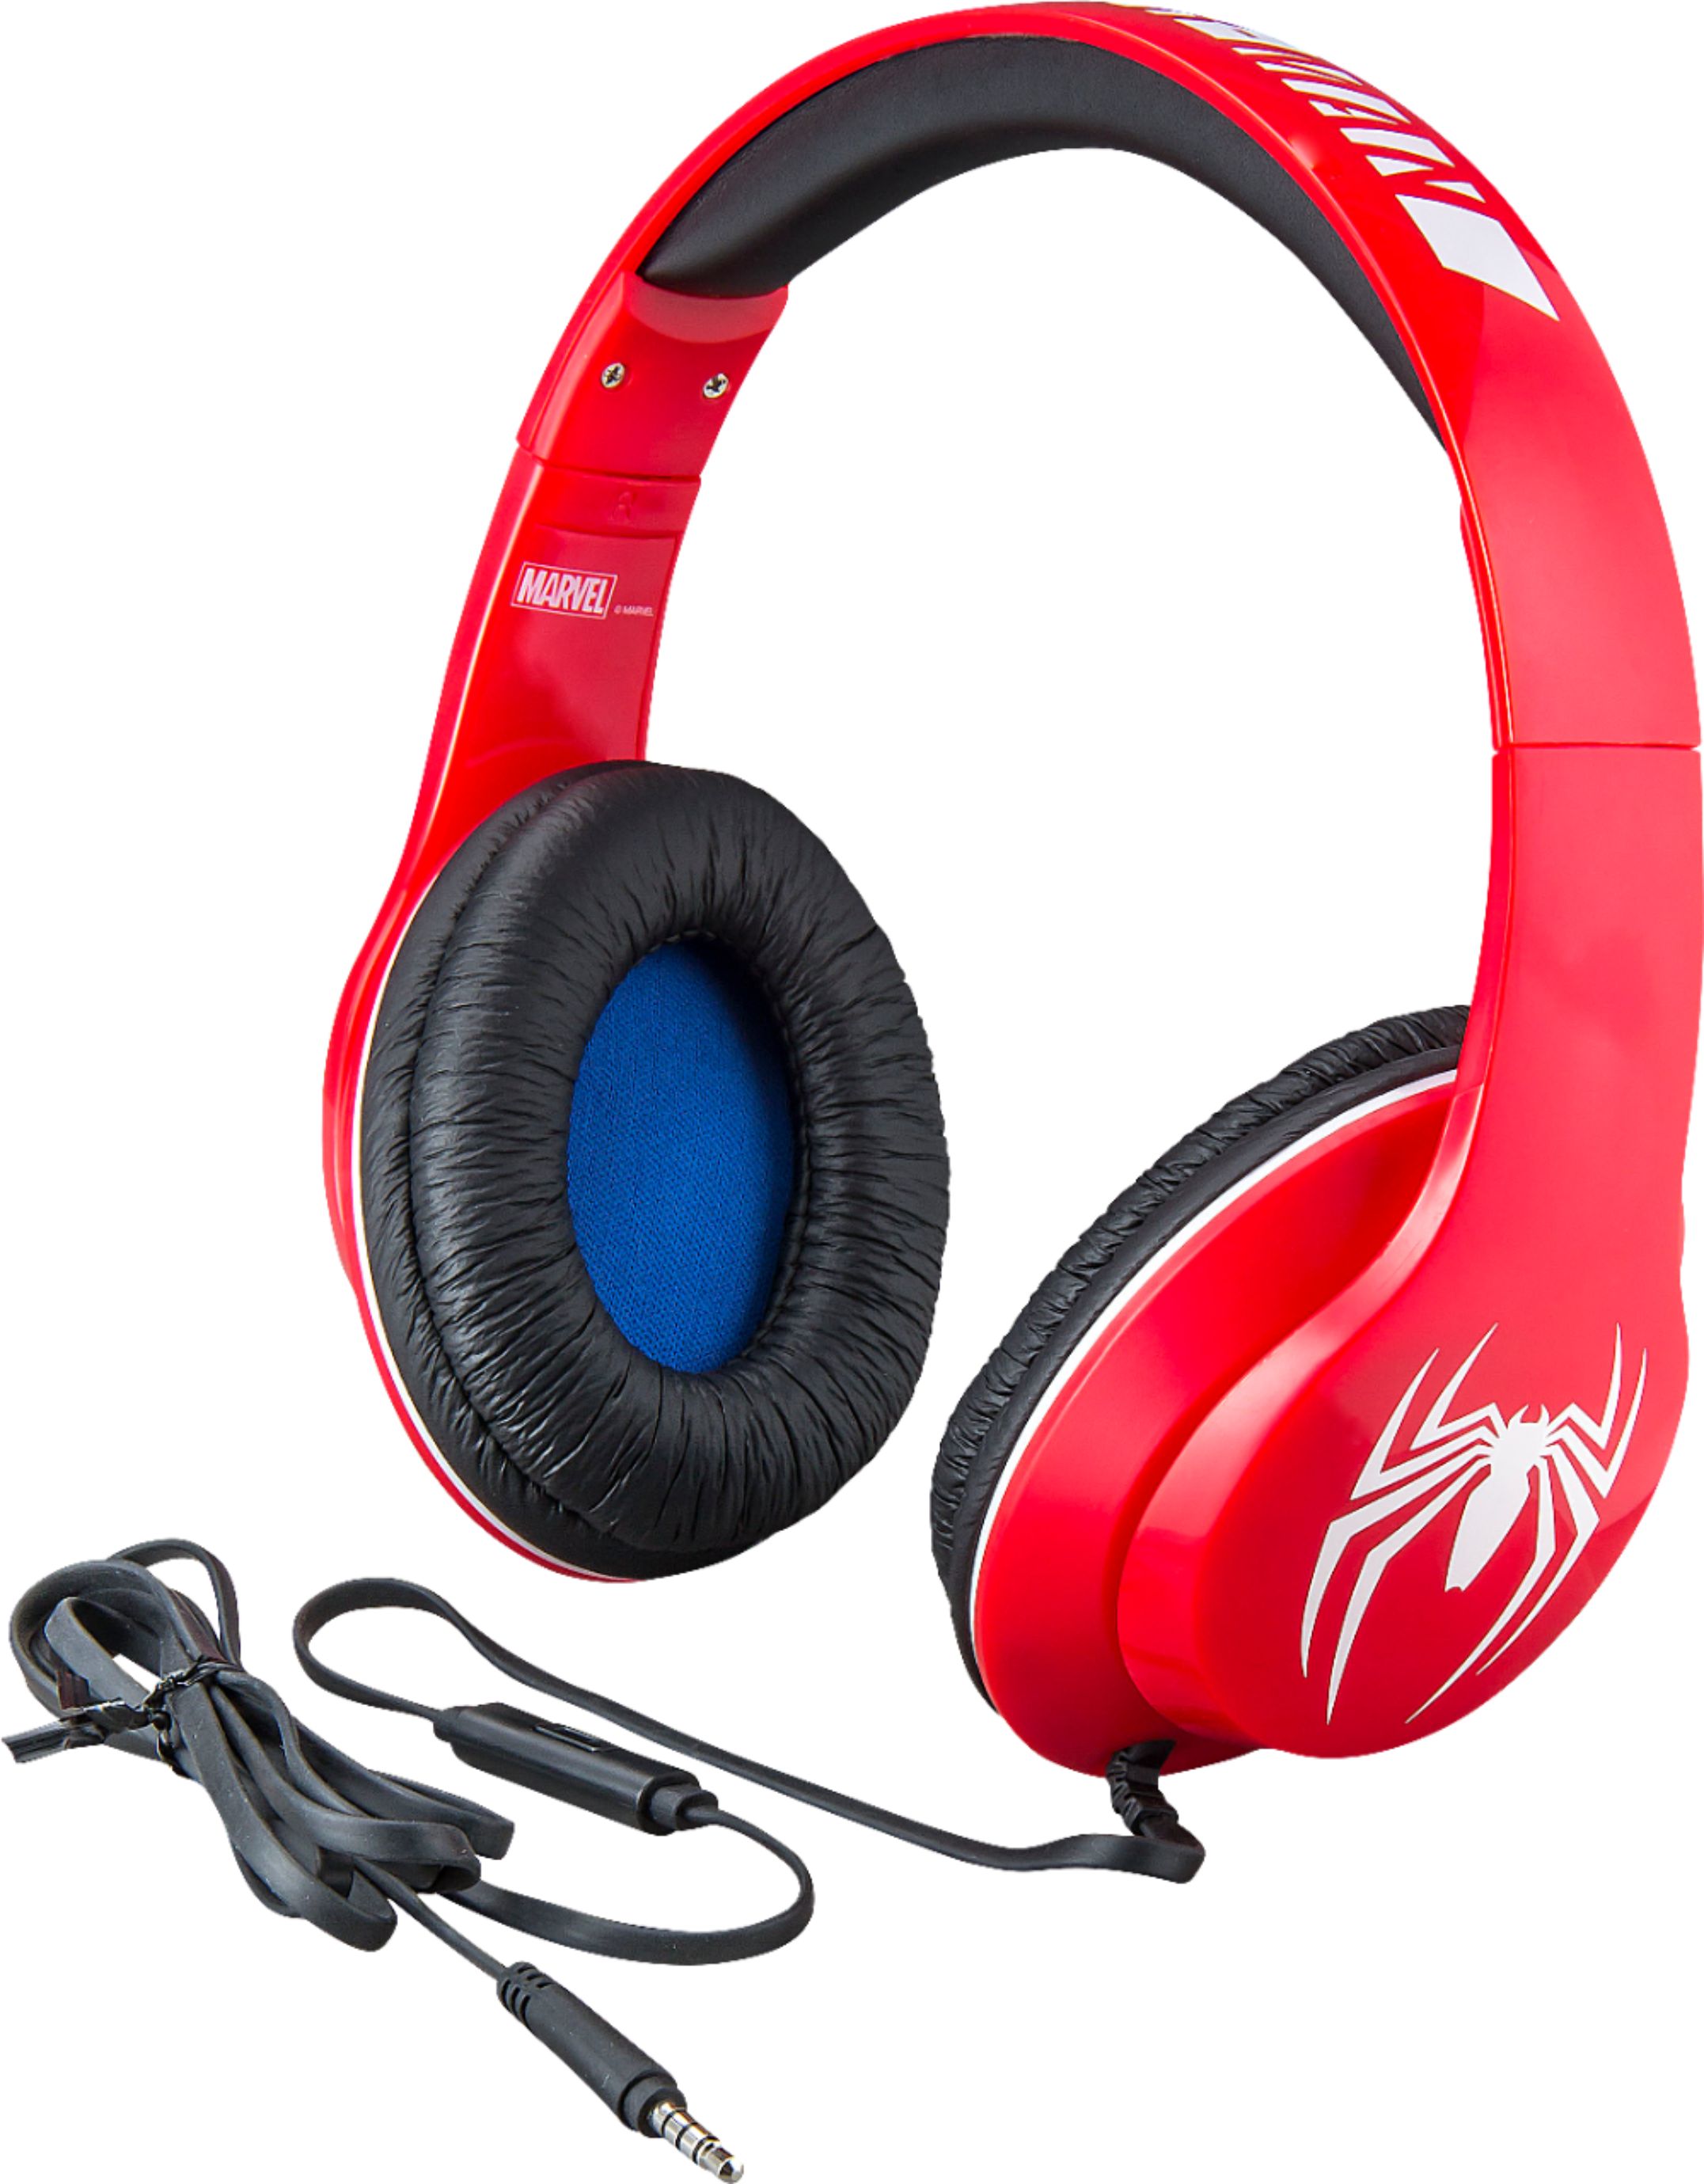 Left View: eKids - Spiderman Co Branded Headphone - red